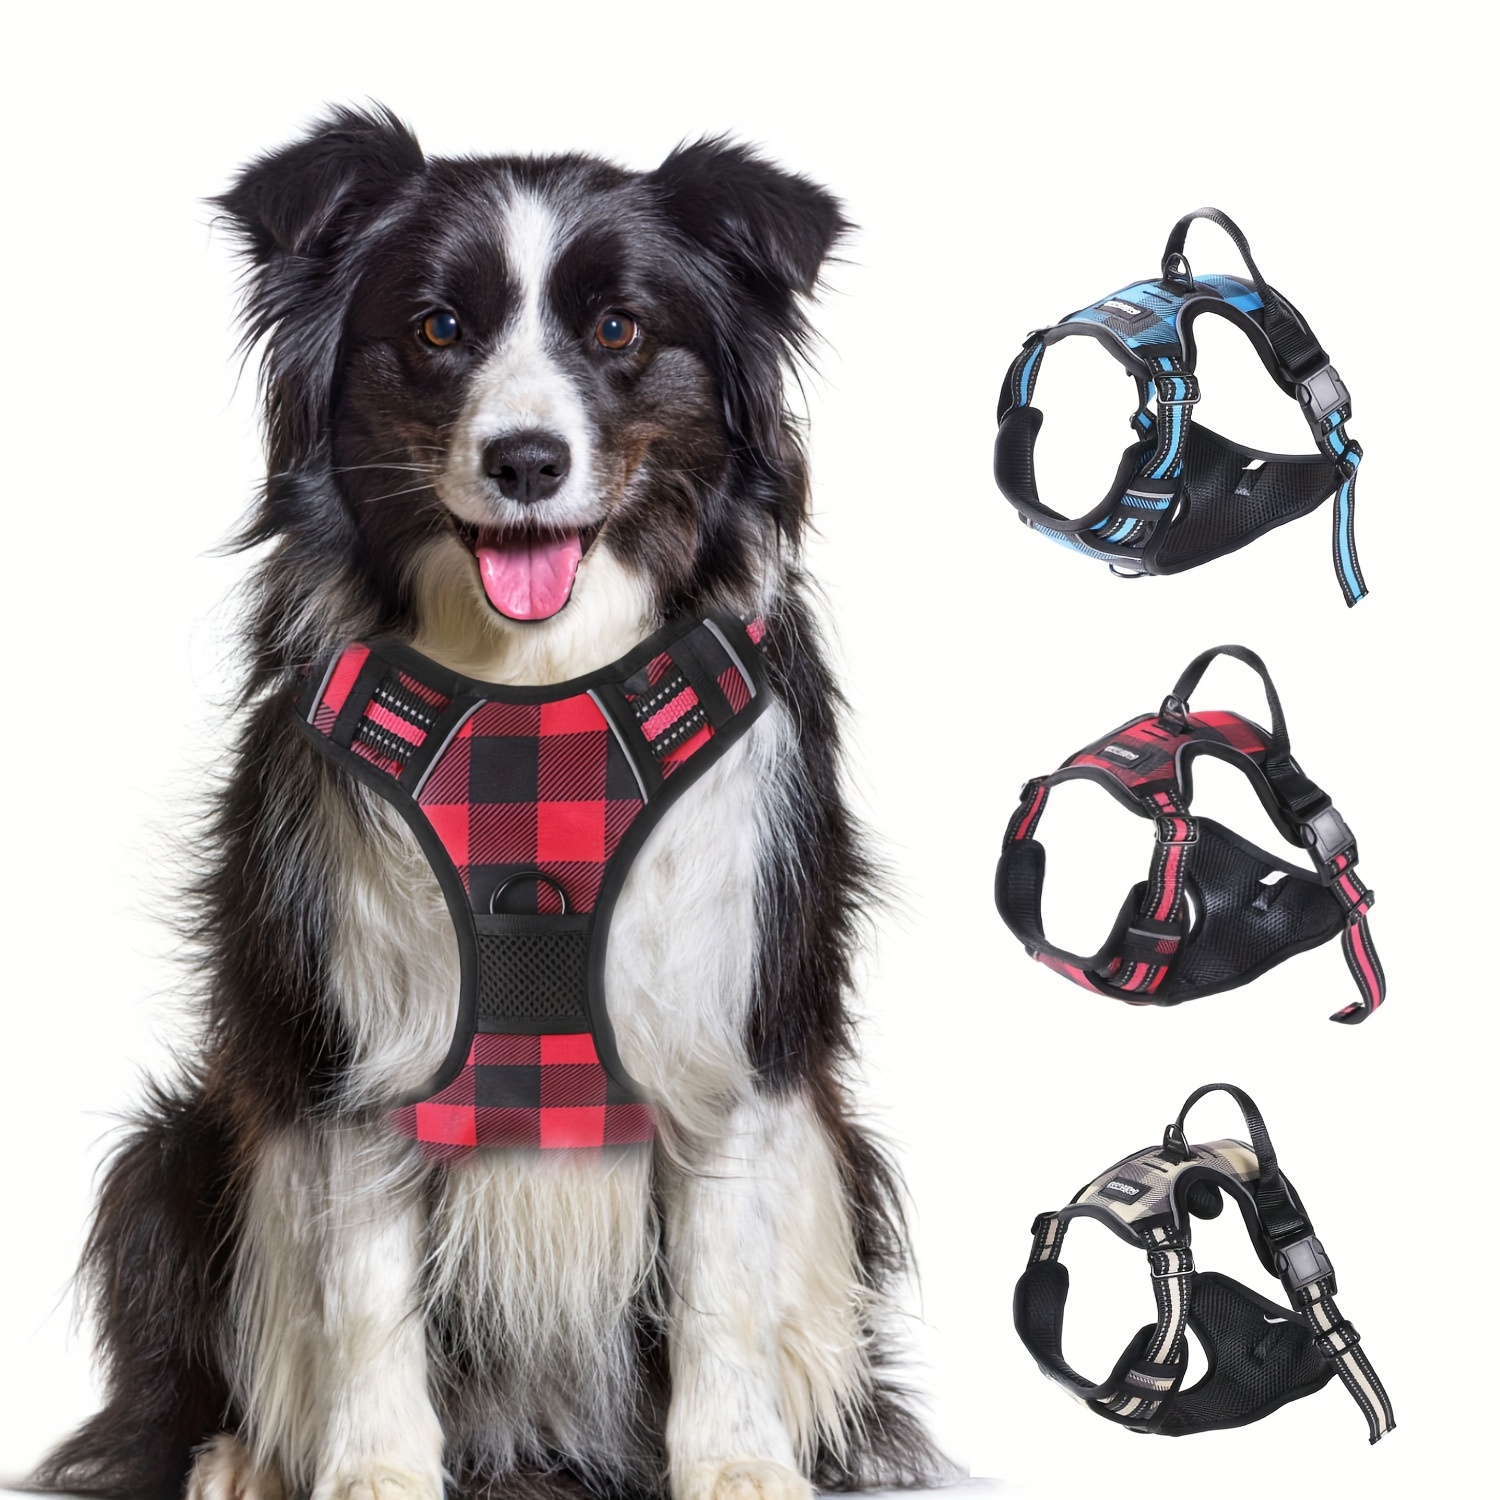 Men's Pet Accessories, Designer Dog Leash, Harness & More